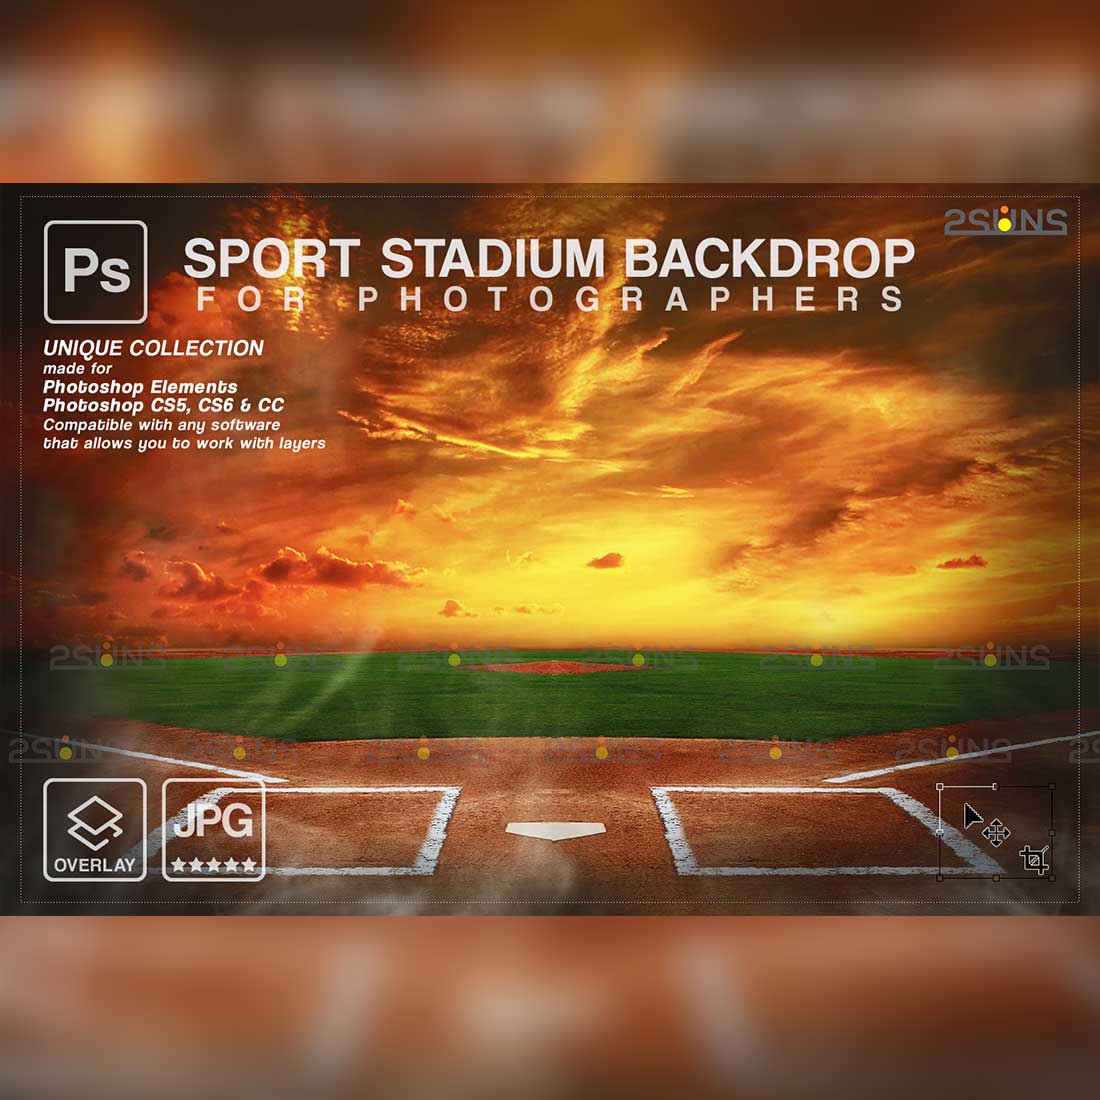 Stylish Baseball Backdrop Sports Digital Background Preview Image.